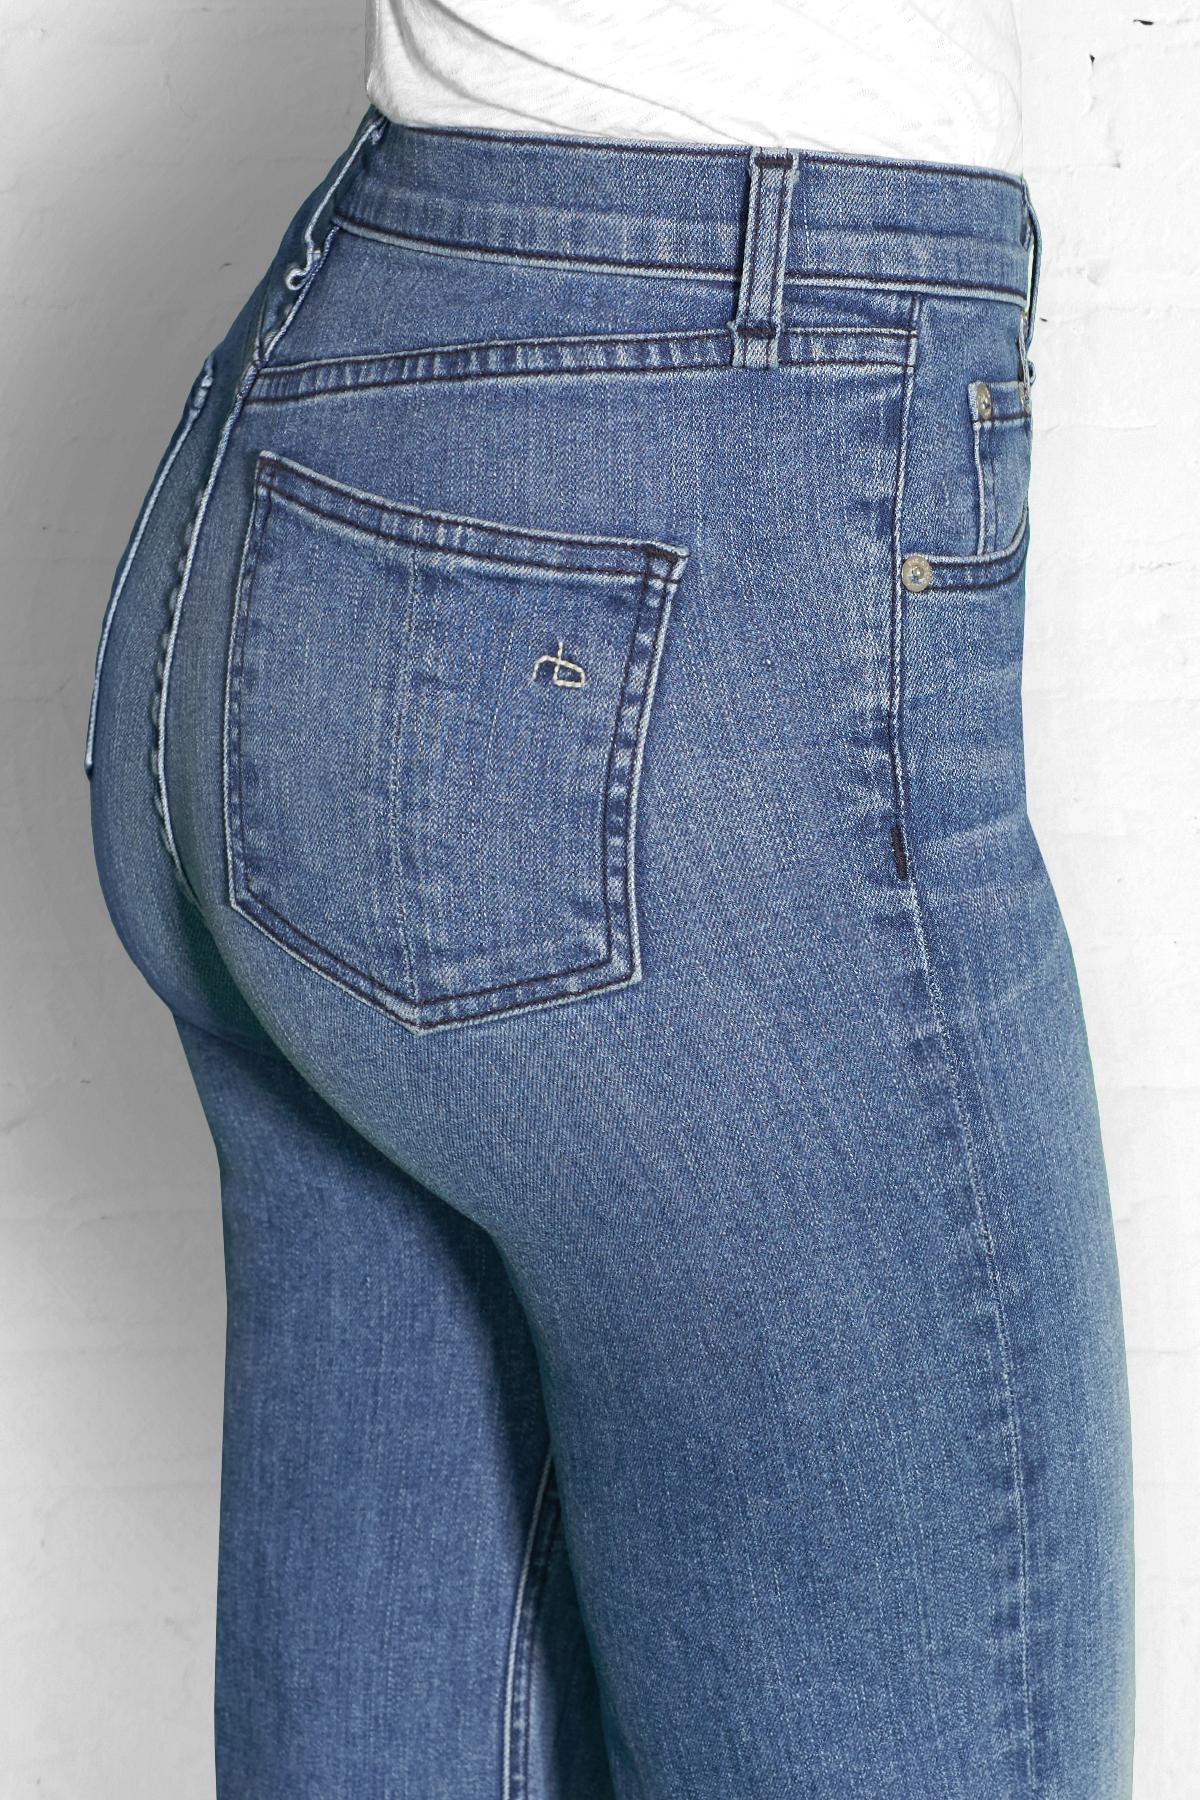 Lyst - Rag & Bone Justine Wide-Leg Jeans in Blue